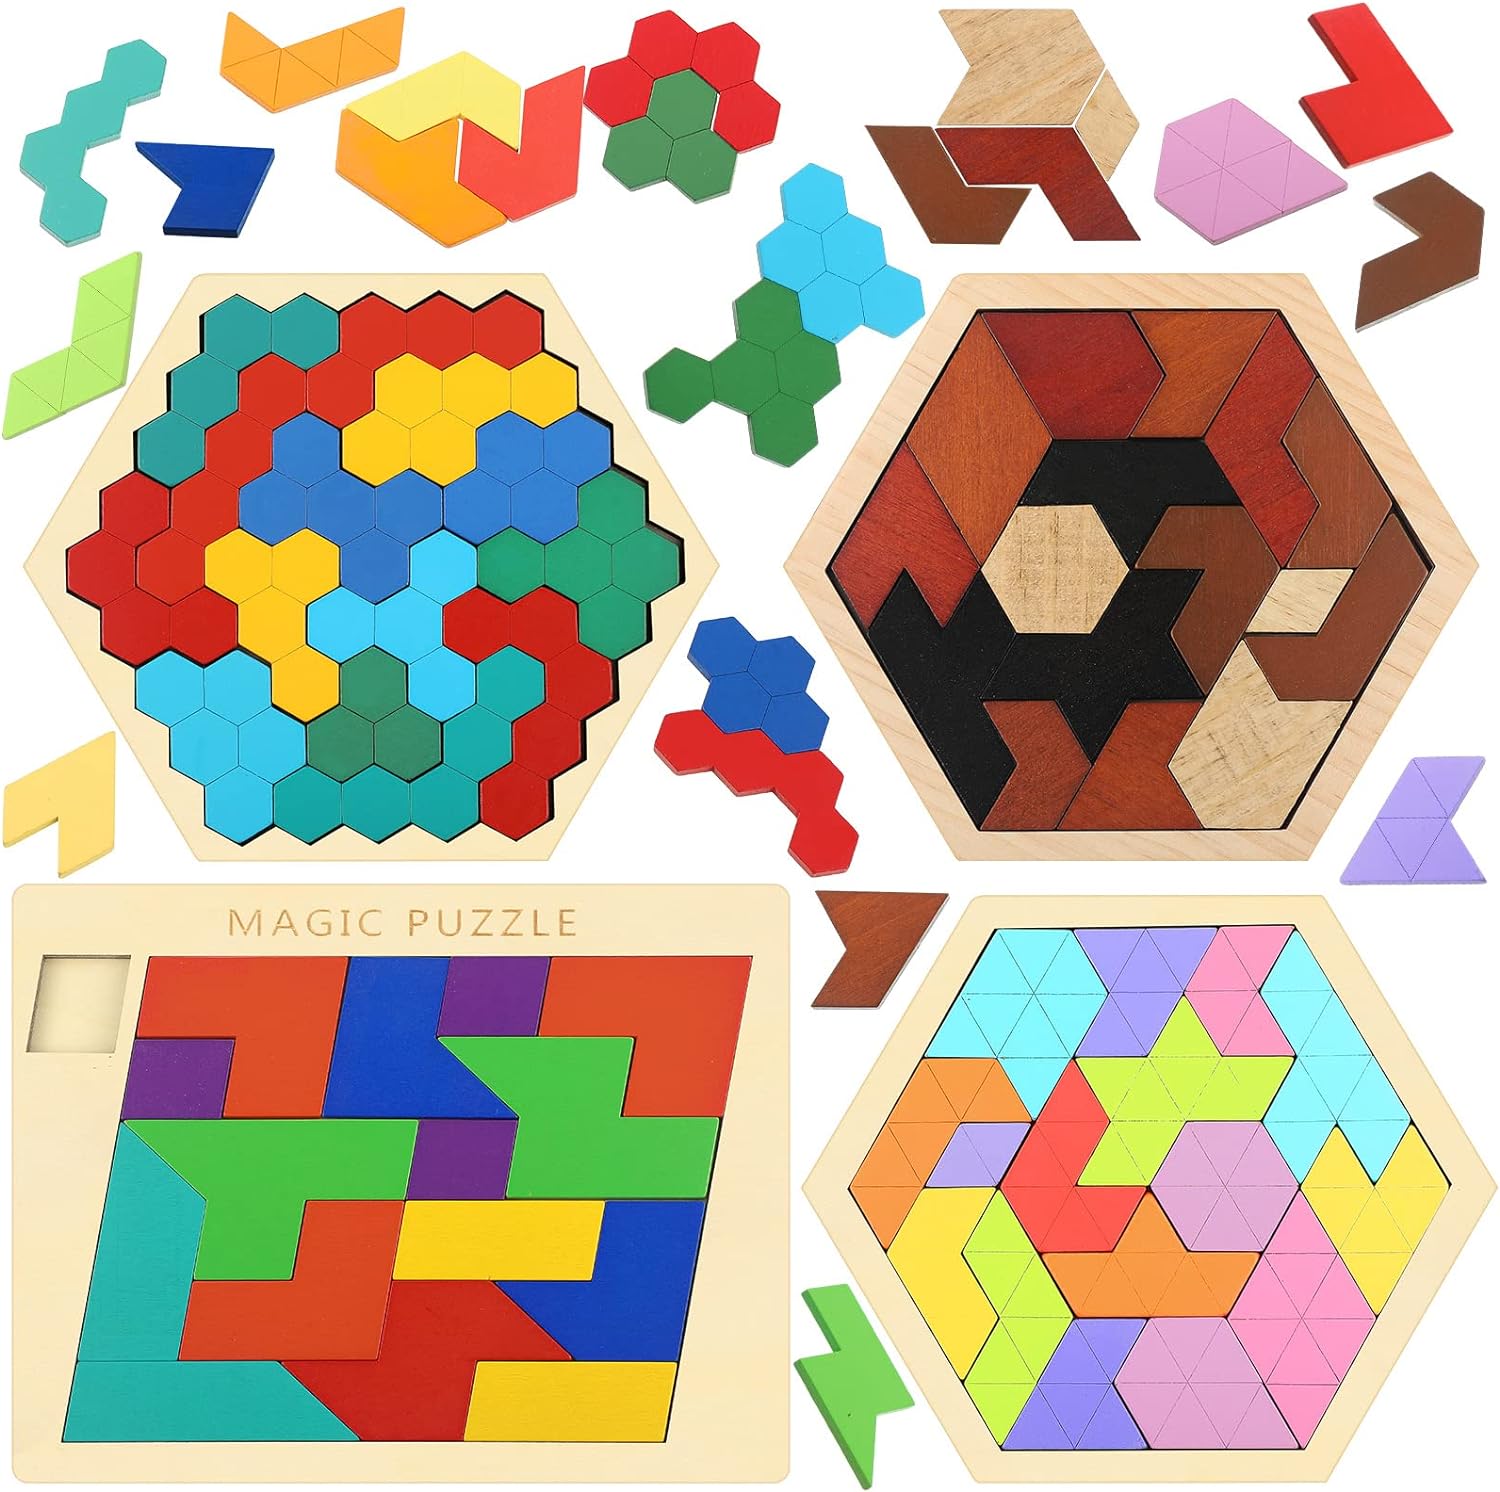 4 Pack Wooden Puzzle Blocks Hexagon Puzzle Geometric Tangram Jigsaw Shape Pattern Block Brain Teaser Toy Russian Blocks Logic IQ STEM Montessori Toy for All Ages Boys Girls Adults Intelligence